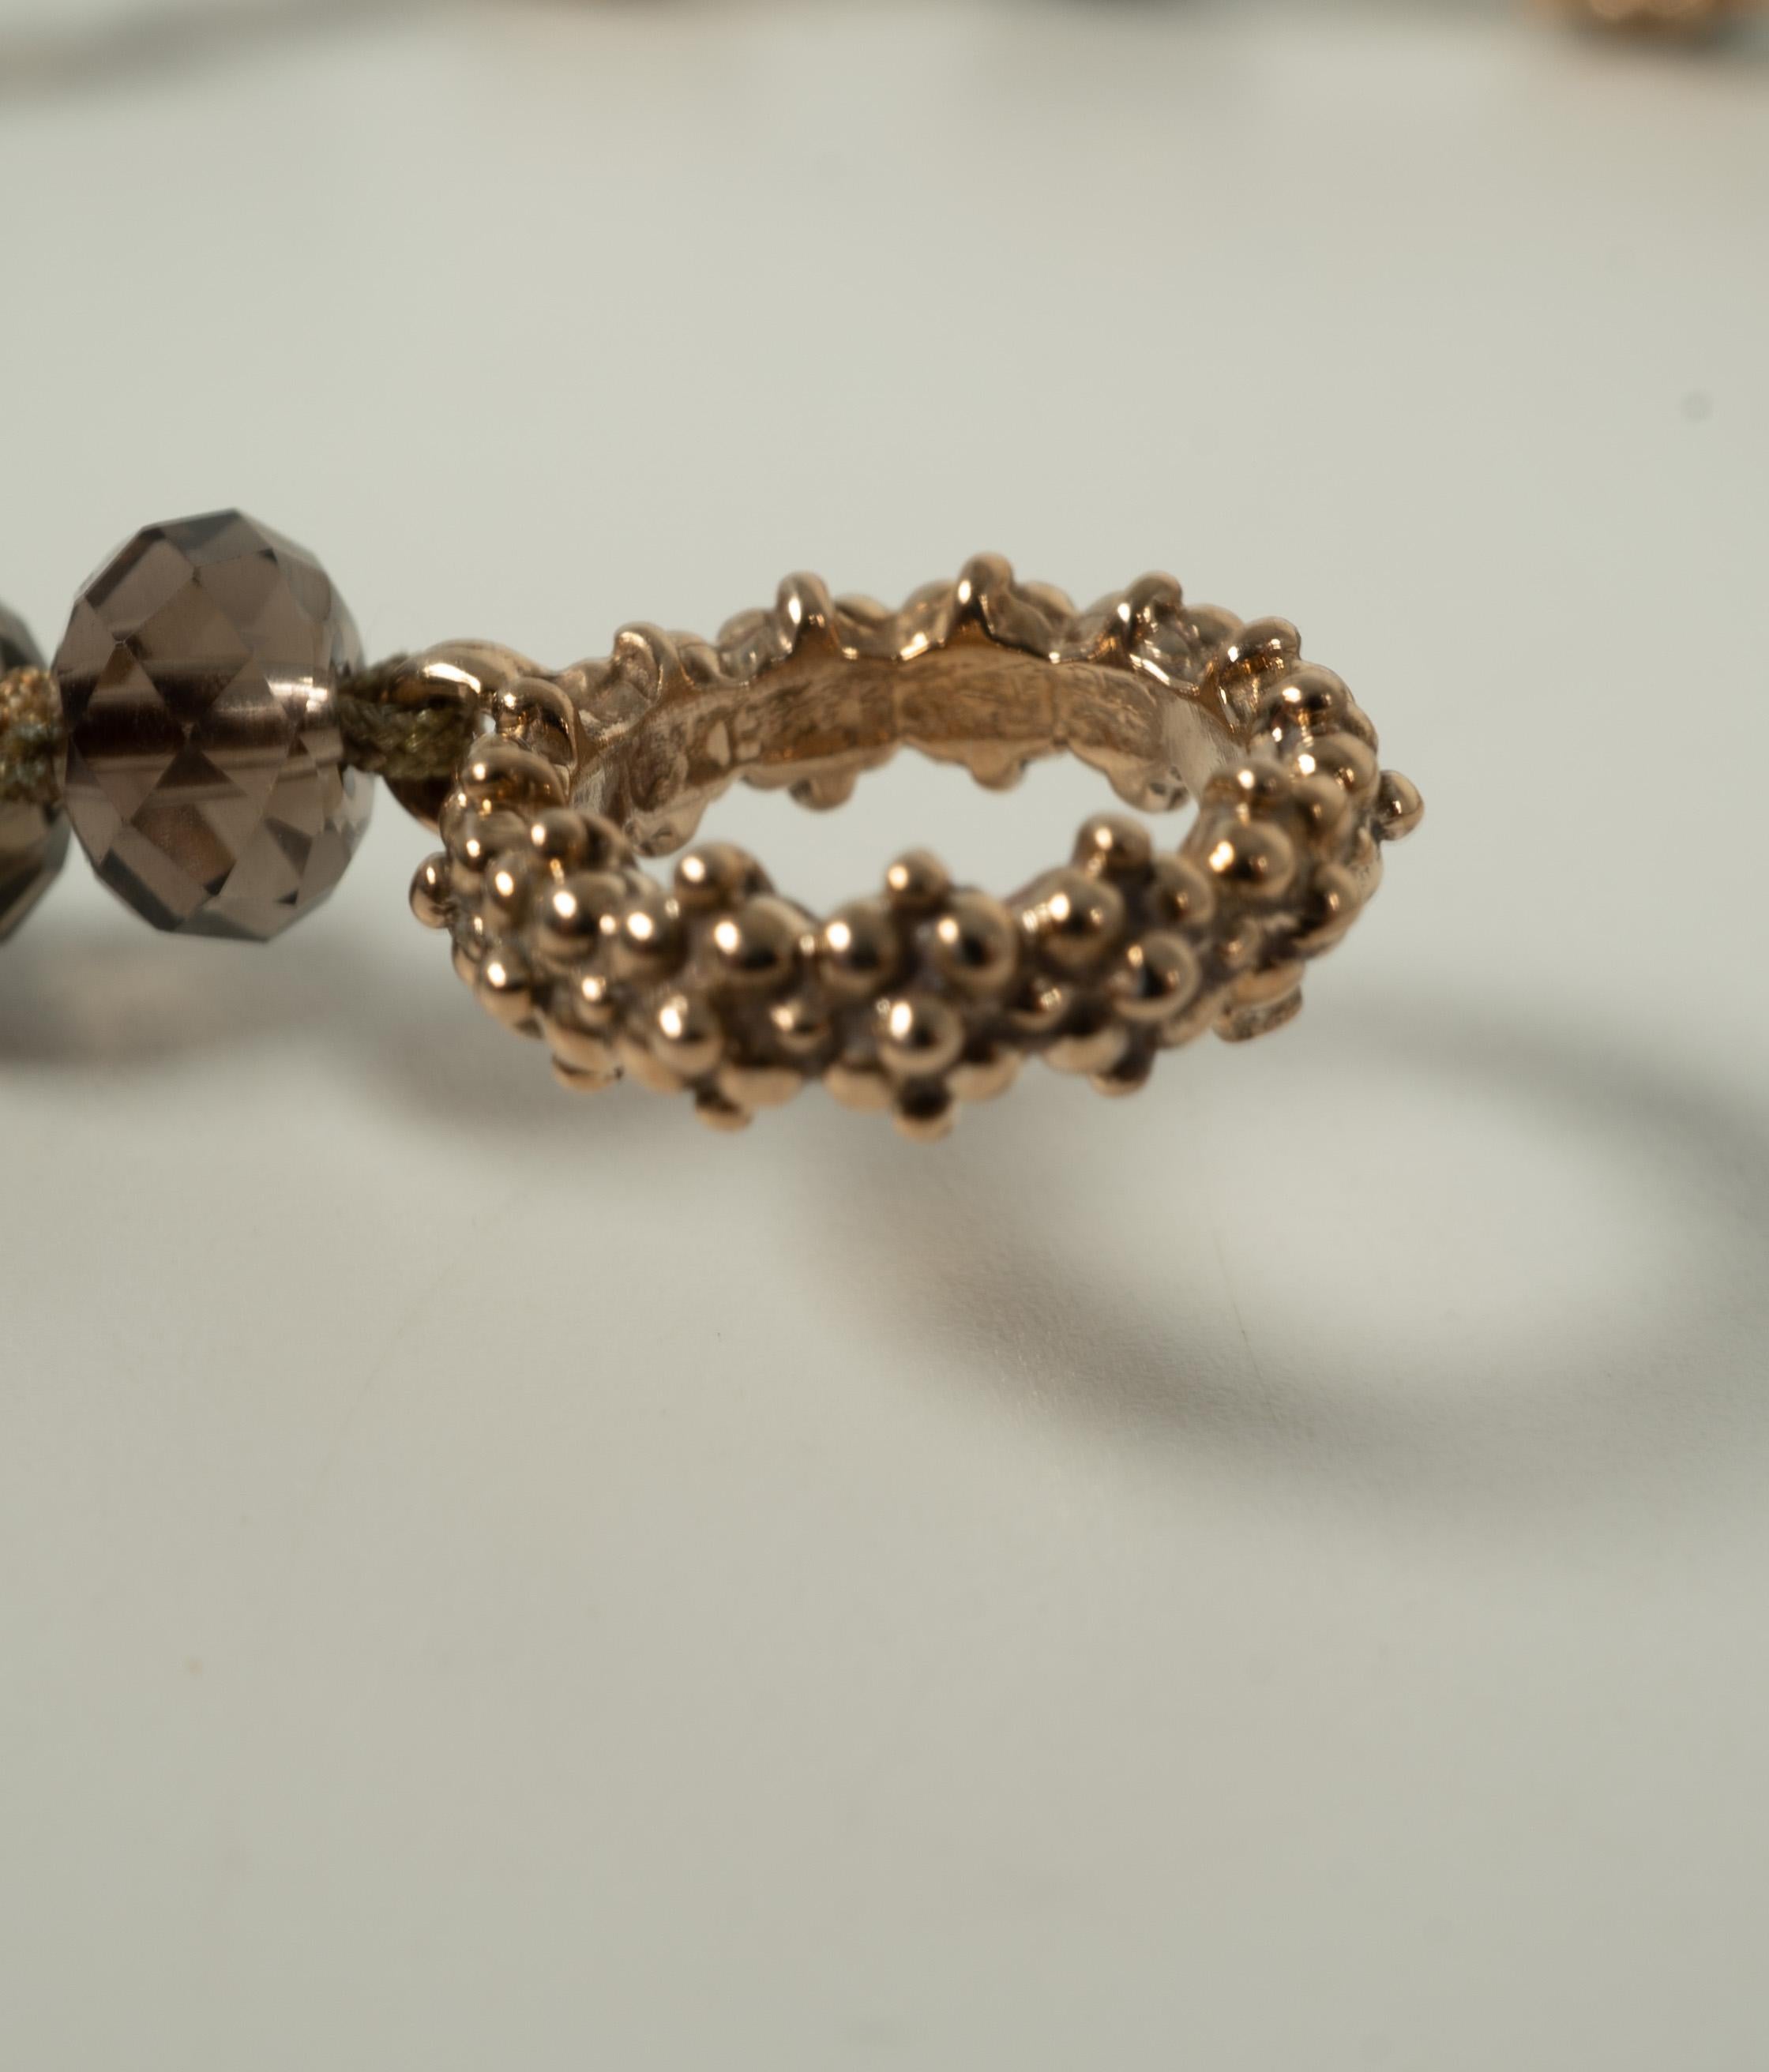 Stephen Dweck Quartz Cameo Brass Necklace In Good Condition For Sale In Dallas, TX